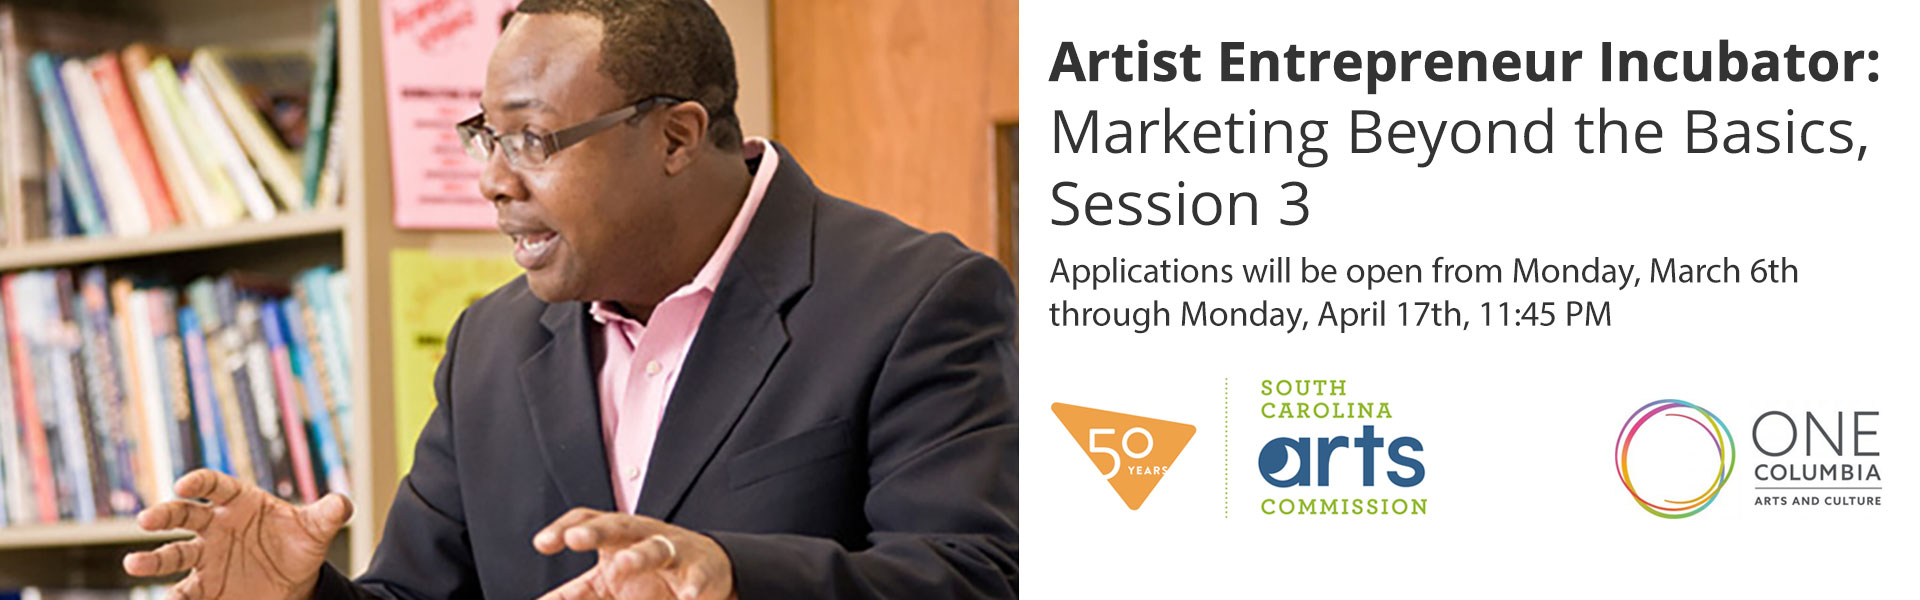 Apply to the Artist Entrepreneur Incubator, Marketing Beyond the Basics, Session 3